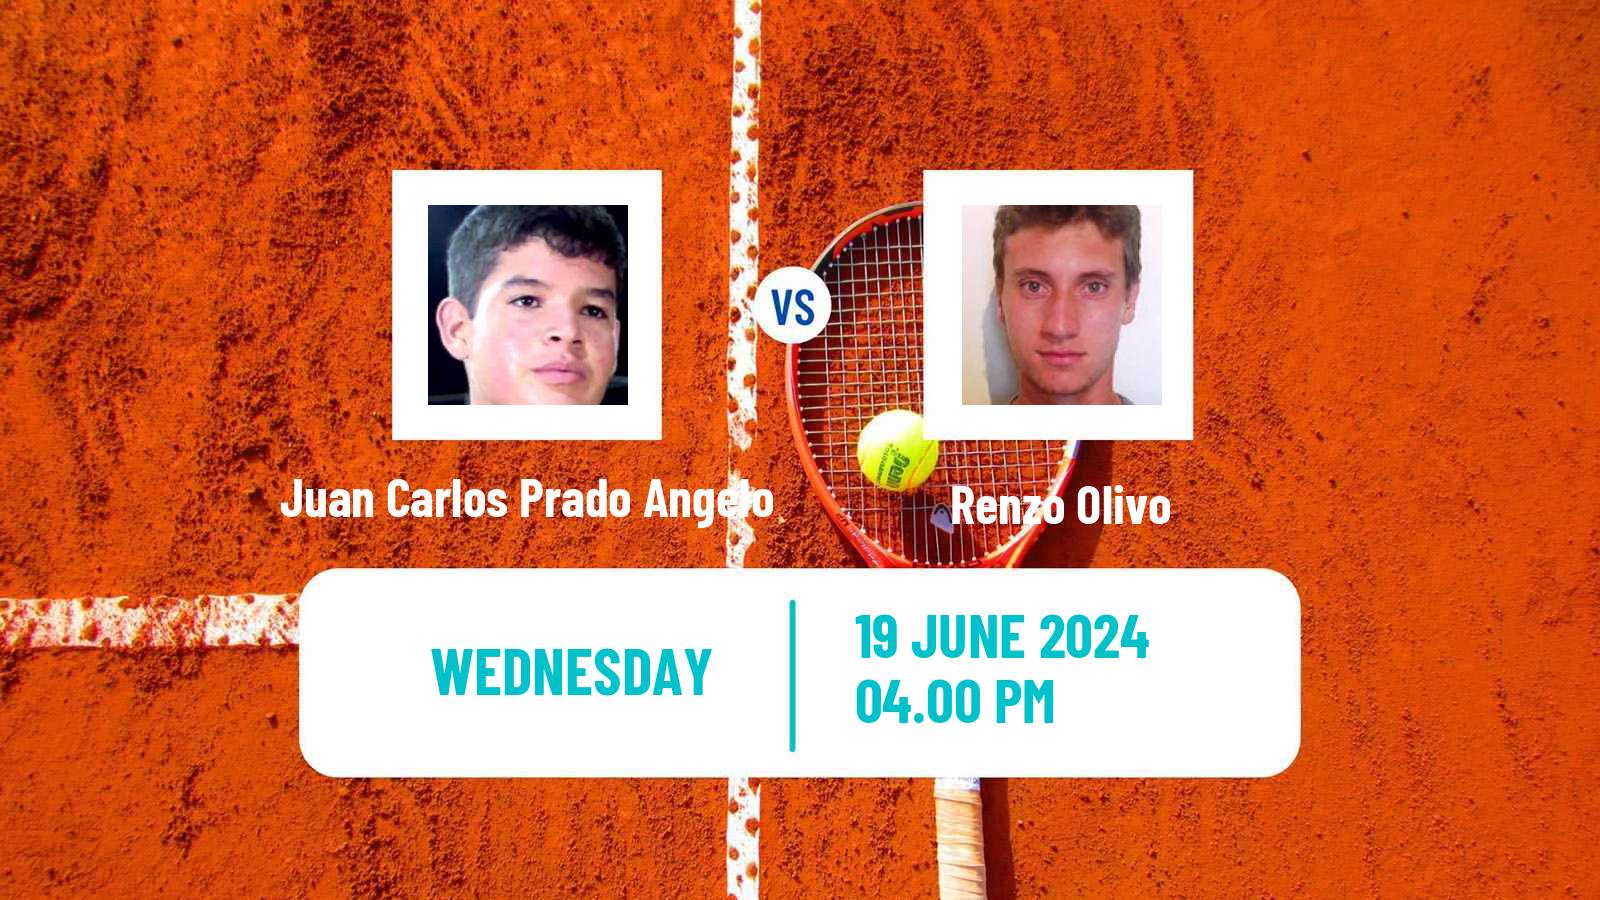 Tennis Santa Cruz 2 Challenger Men Juan Carlos Prado Angelo - Renzo Olivo